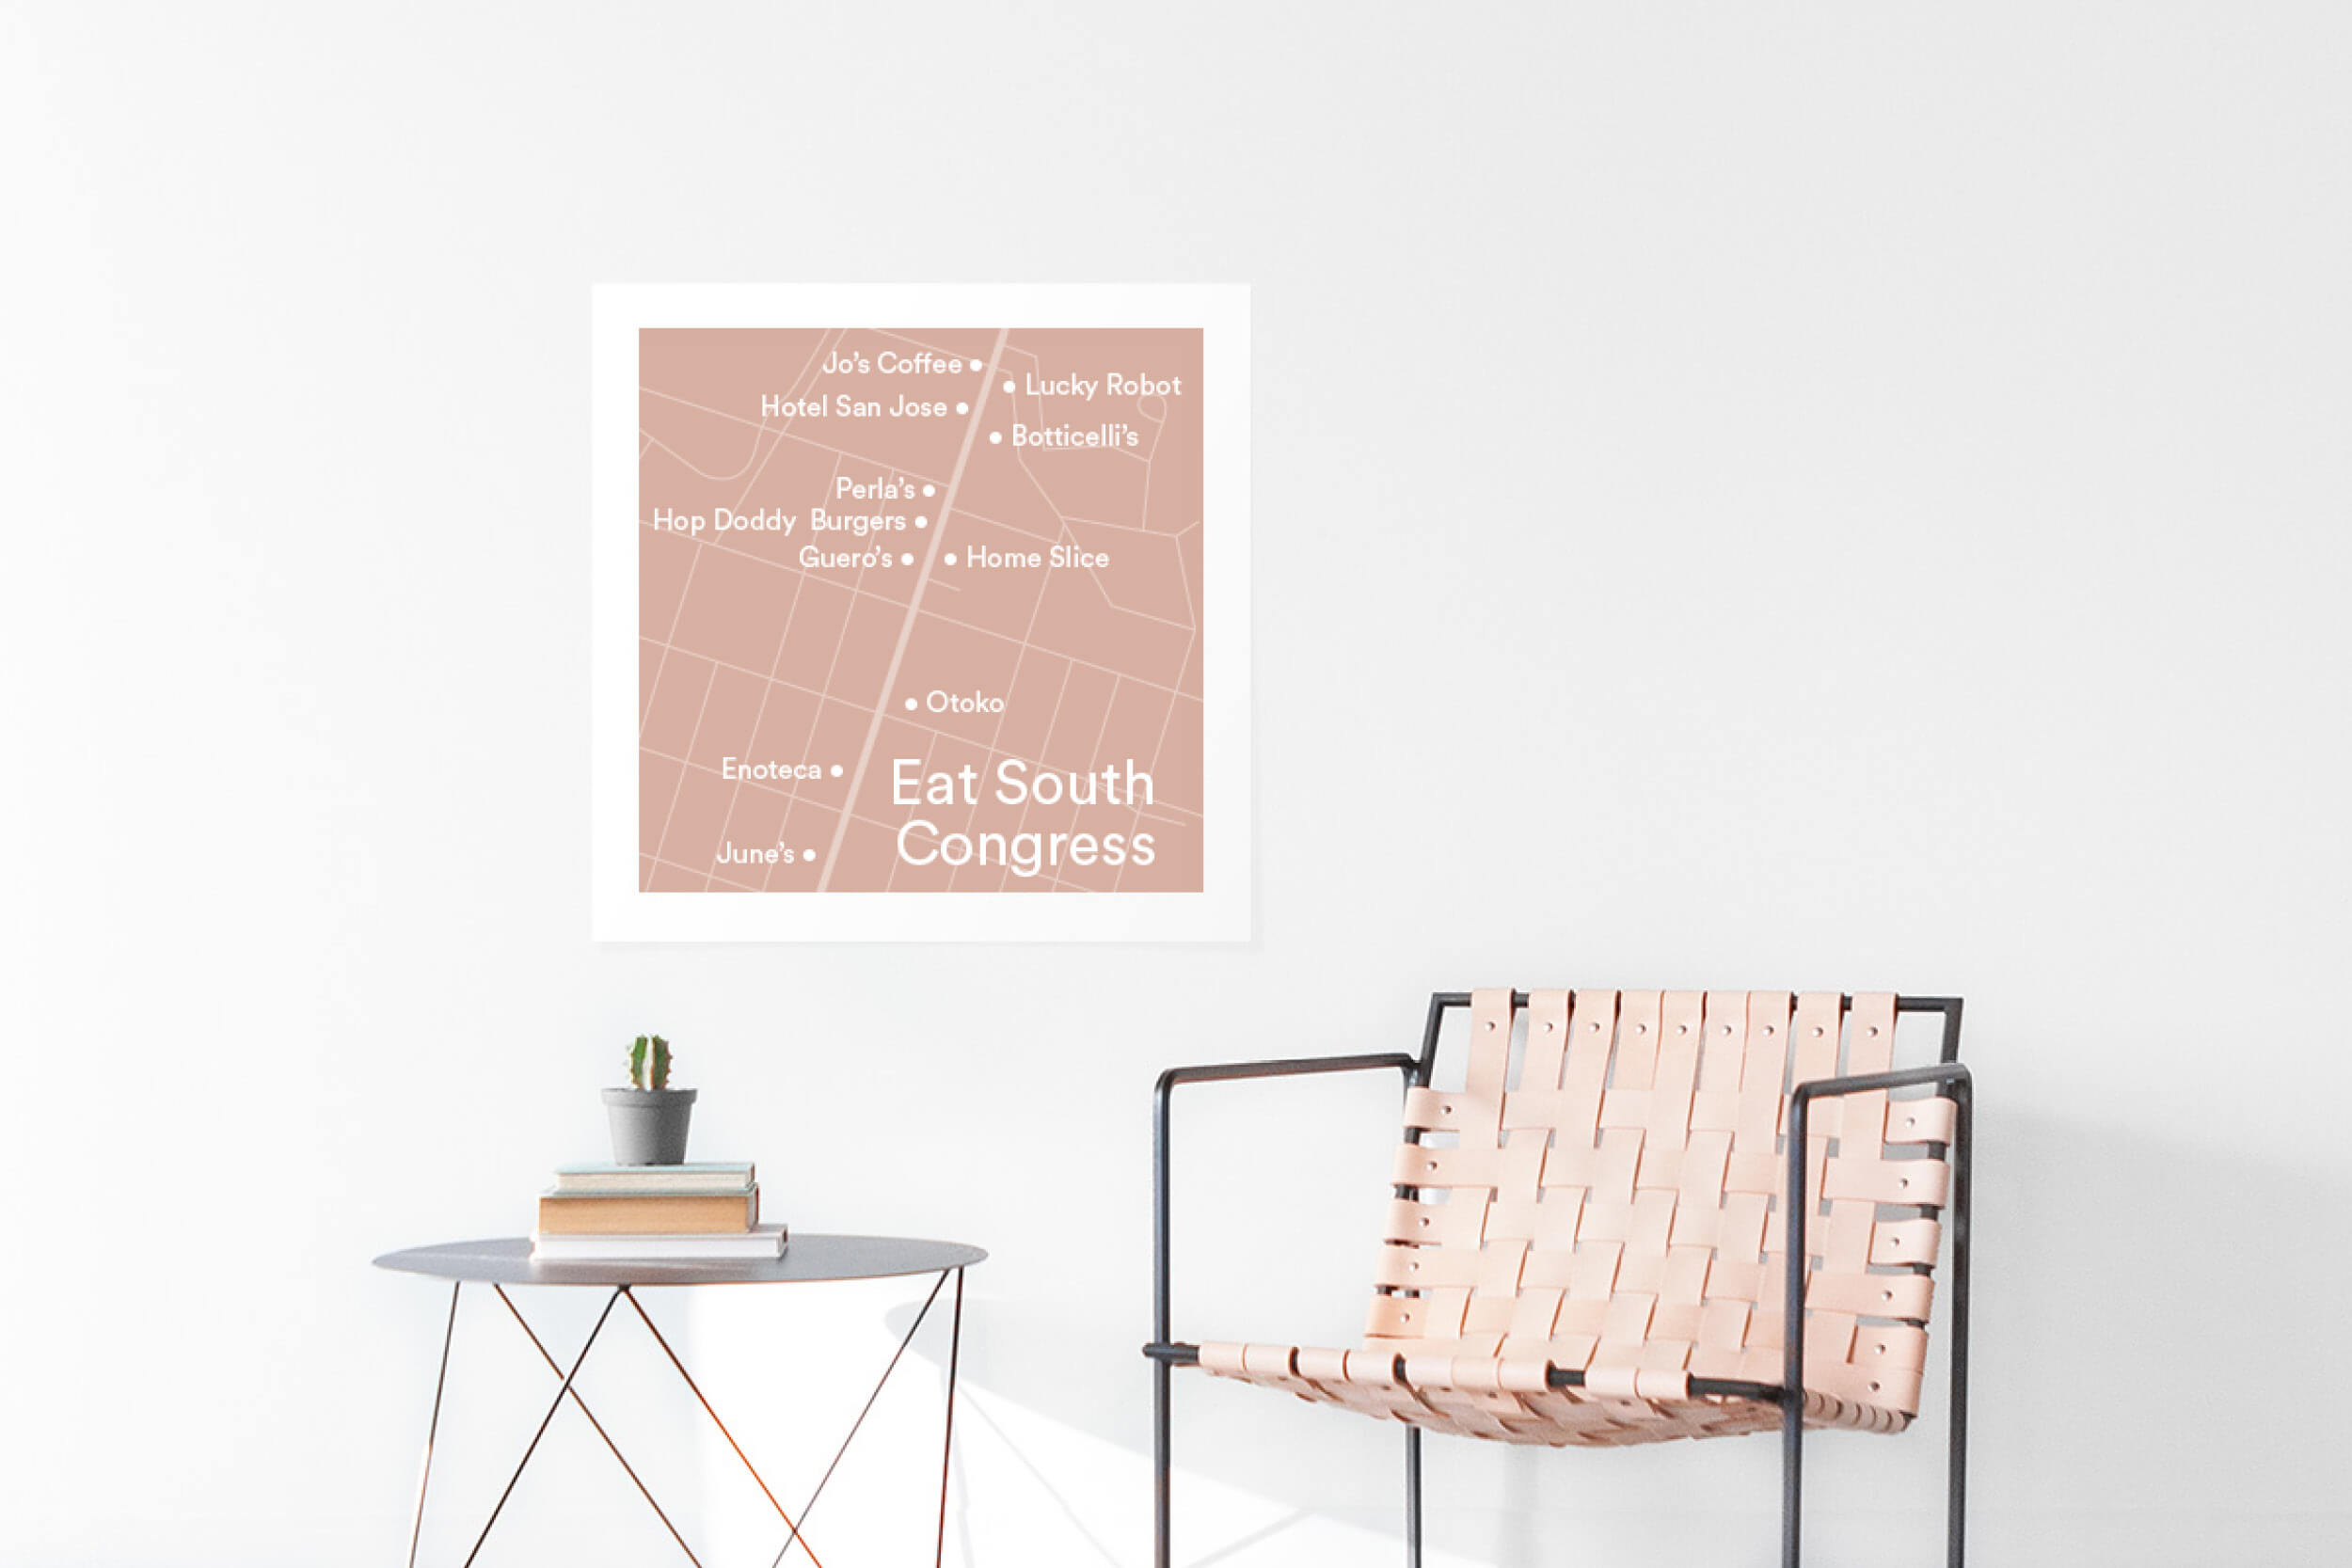 Printed map of neighborhood restaurants on the wall